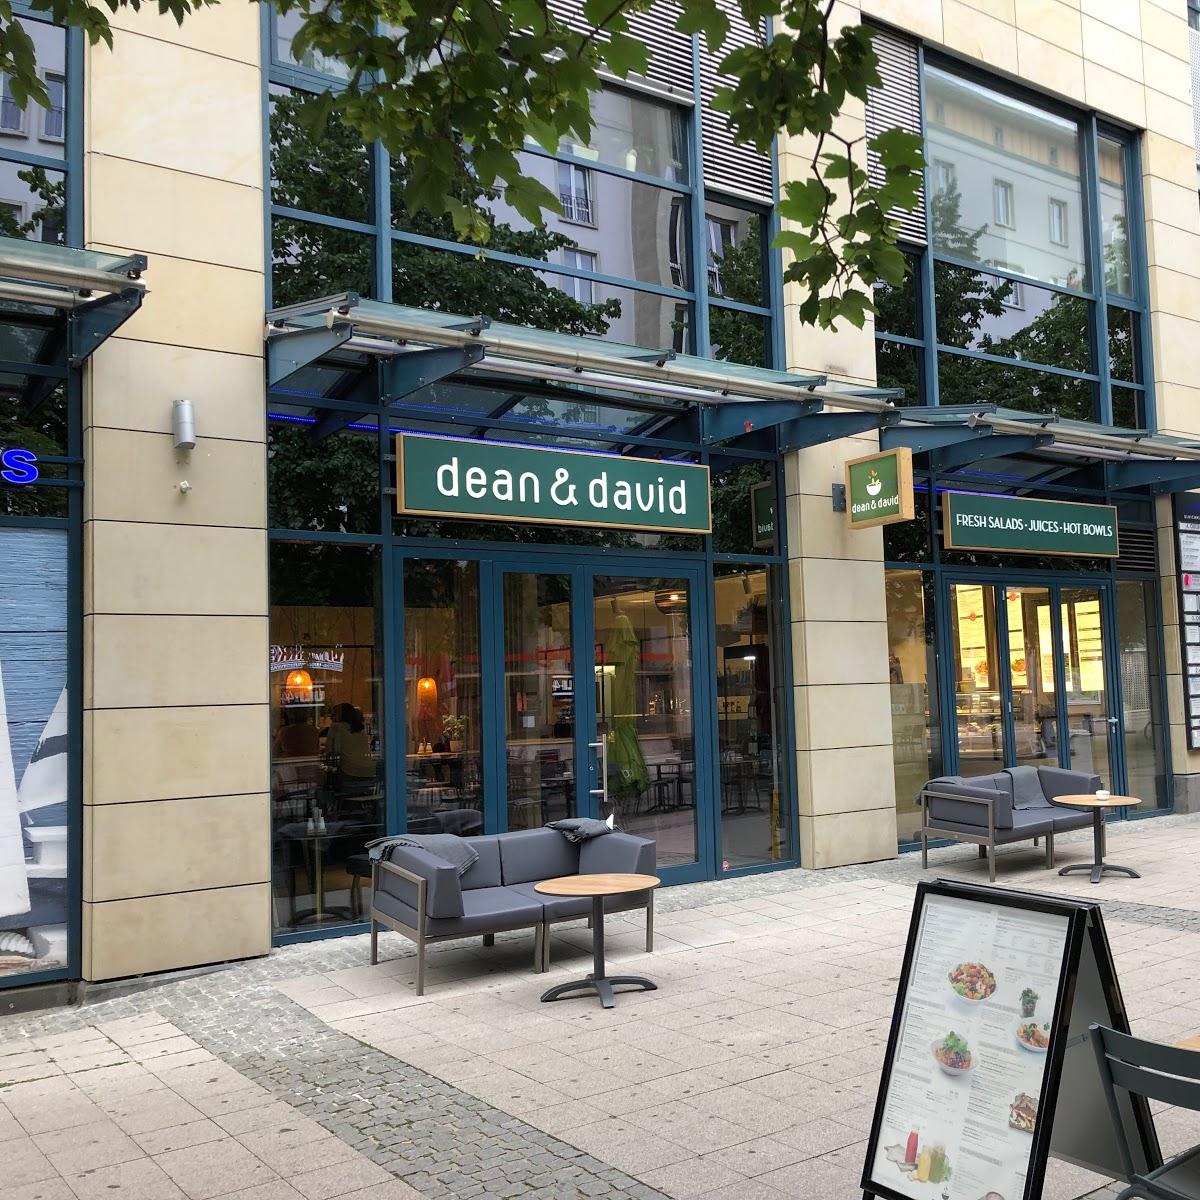 Restaurant "dean&david" in Magdeburg